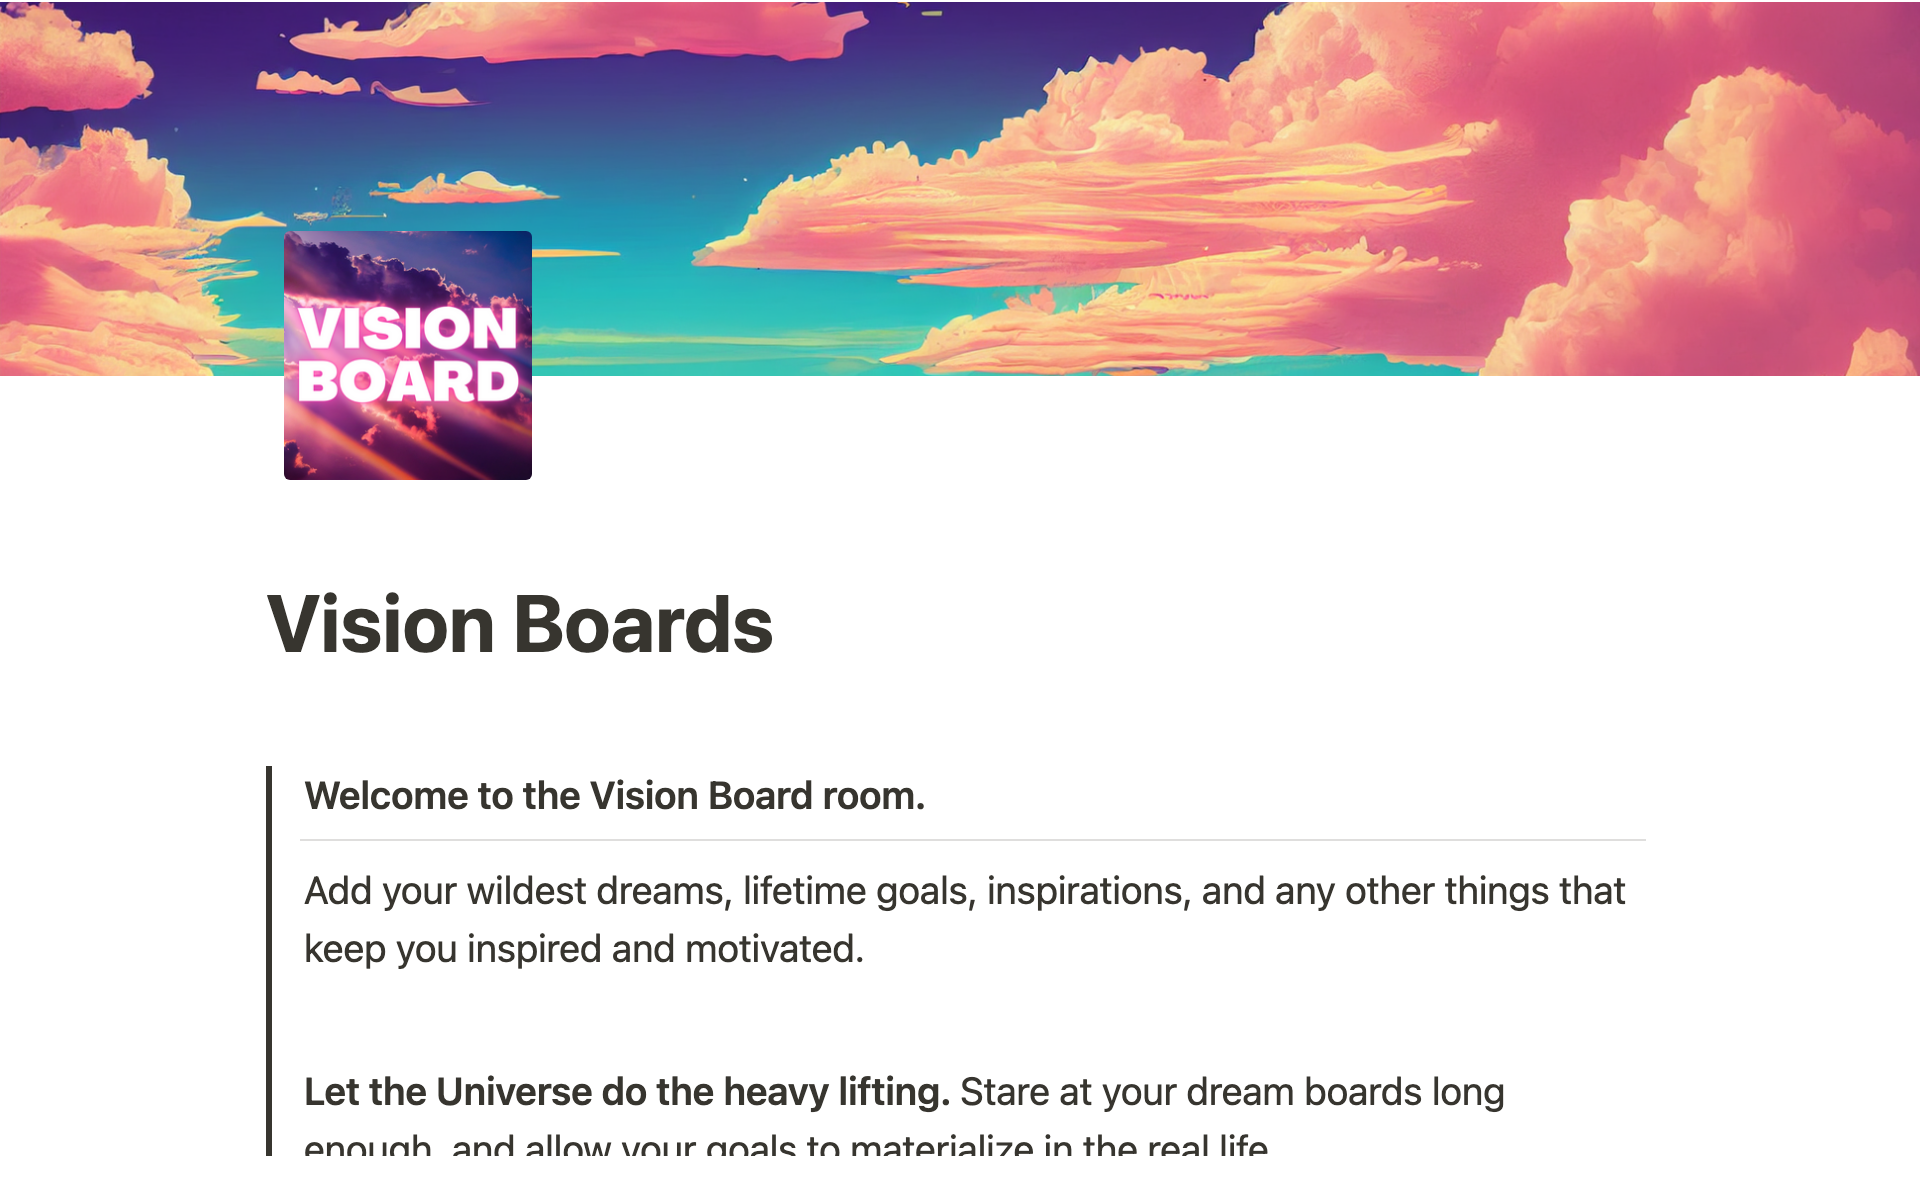 Vision Board Kit - Organize by Dreams